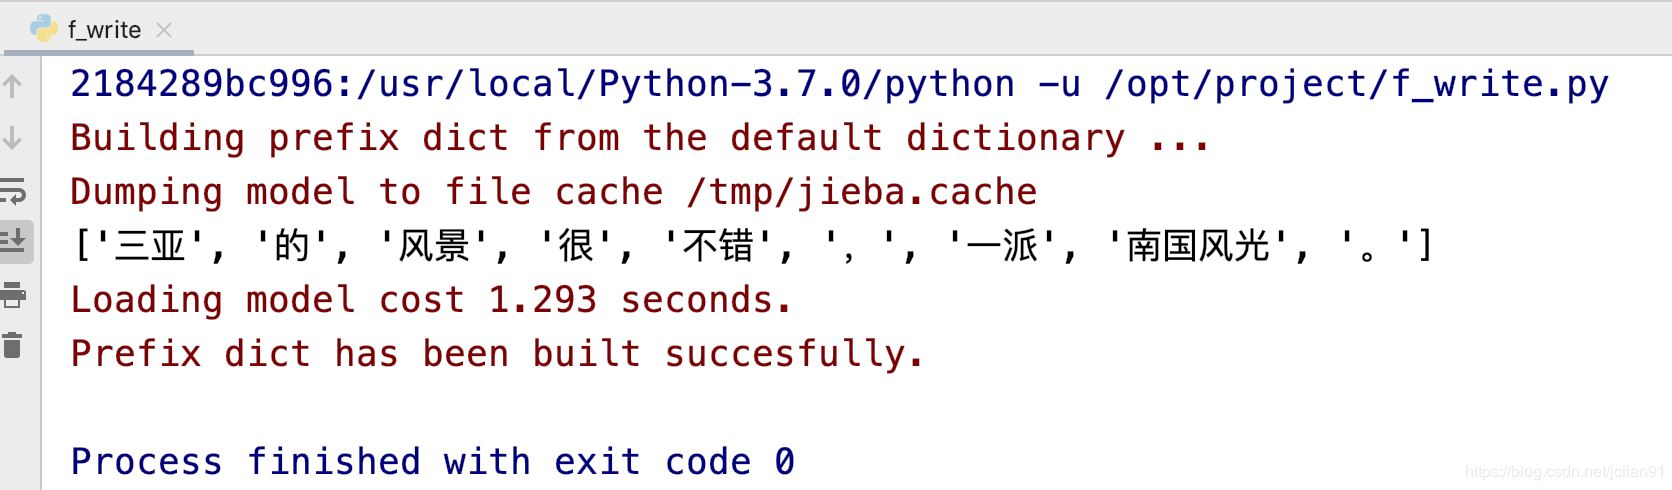 PyCharm使用Docker镜像搭建Python开发环境